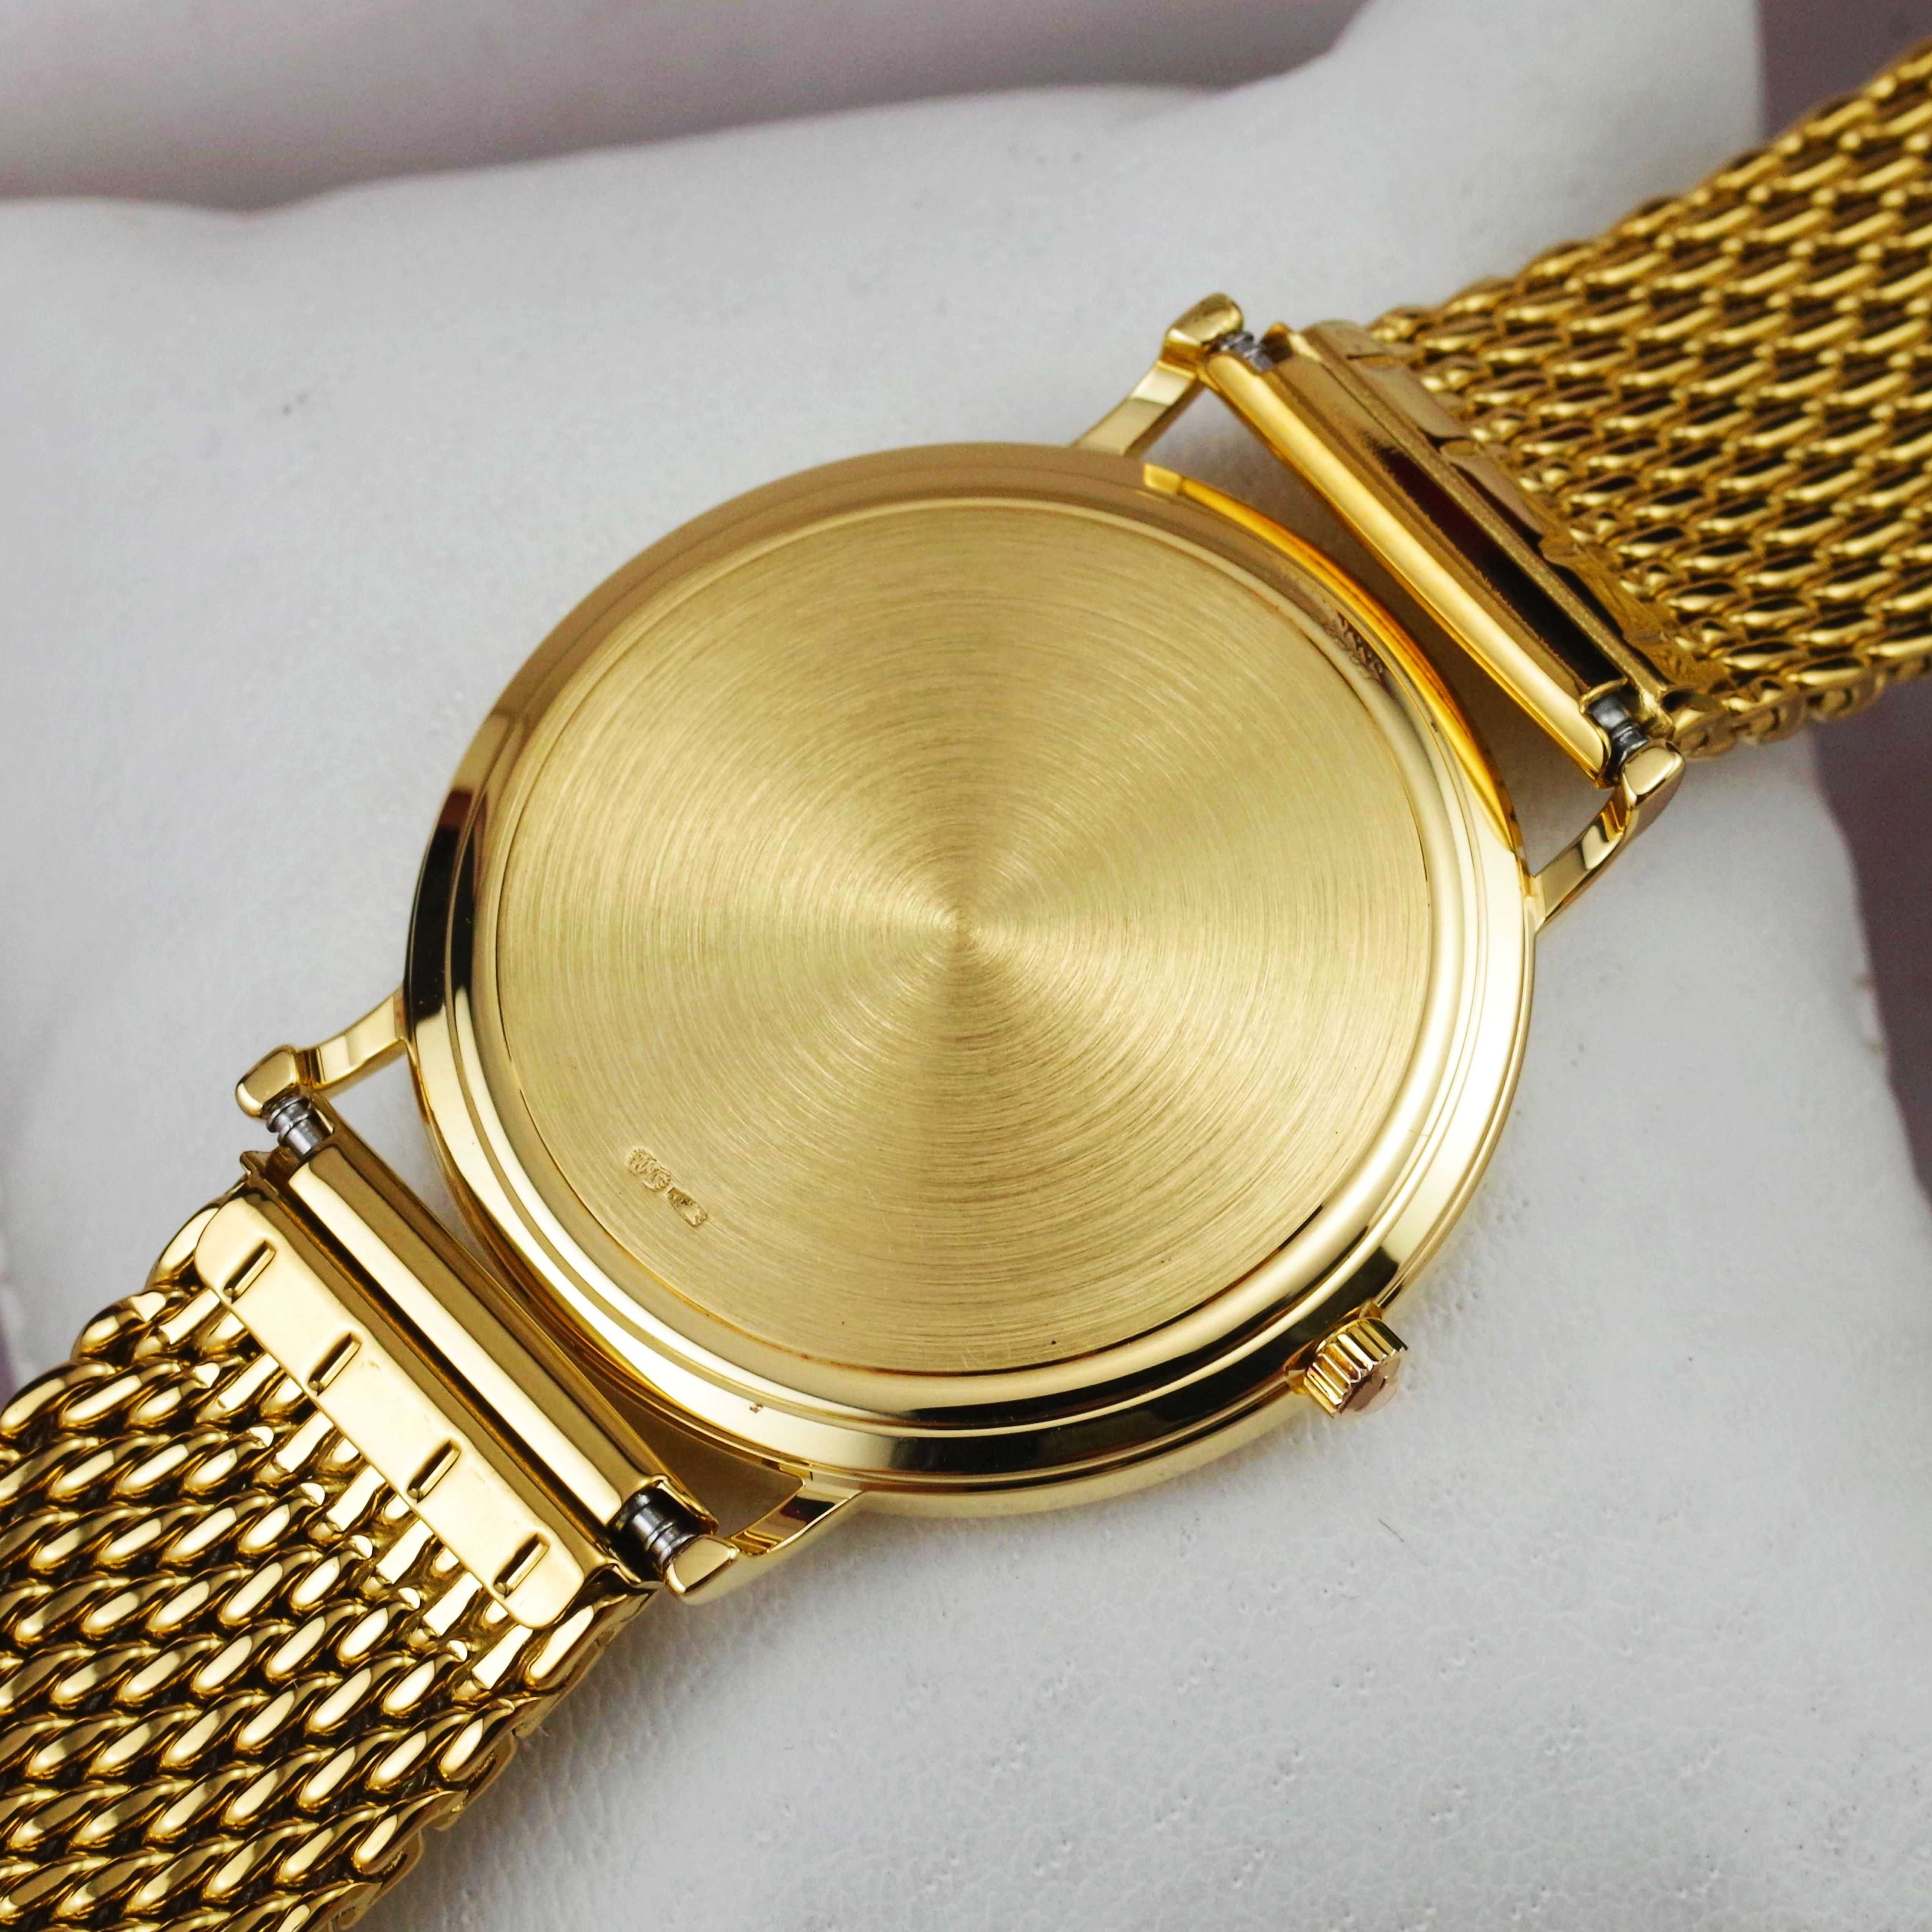 OMEGA zegarek męski LITE ZŁOTO 18K / 750 vintage cal. 1430 SZAFIR 1991